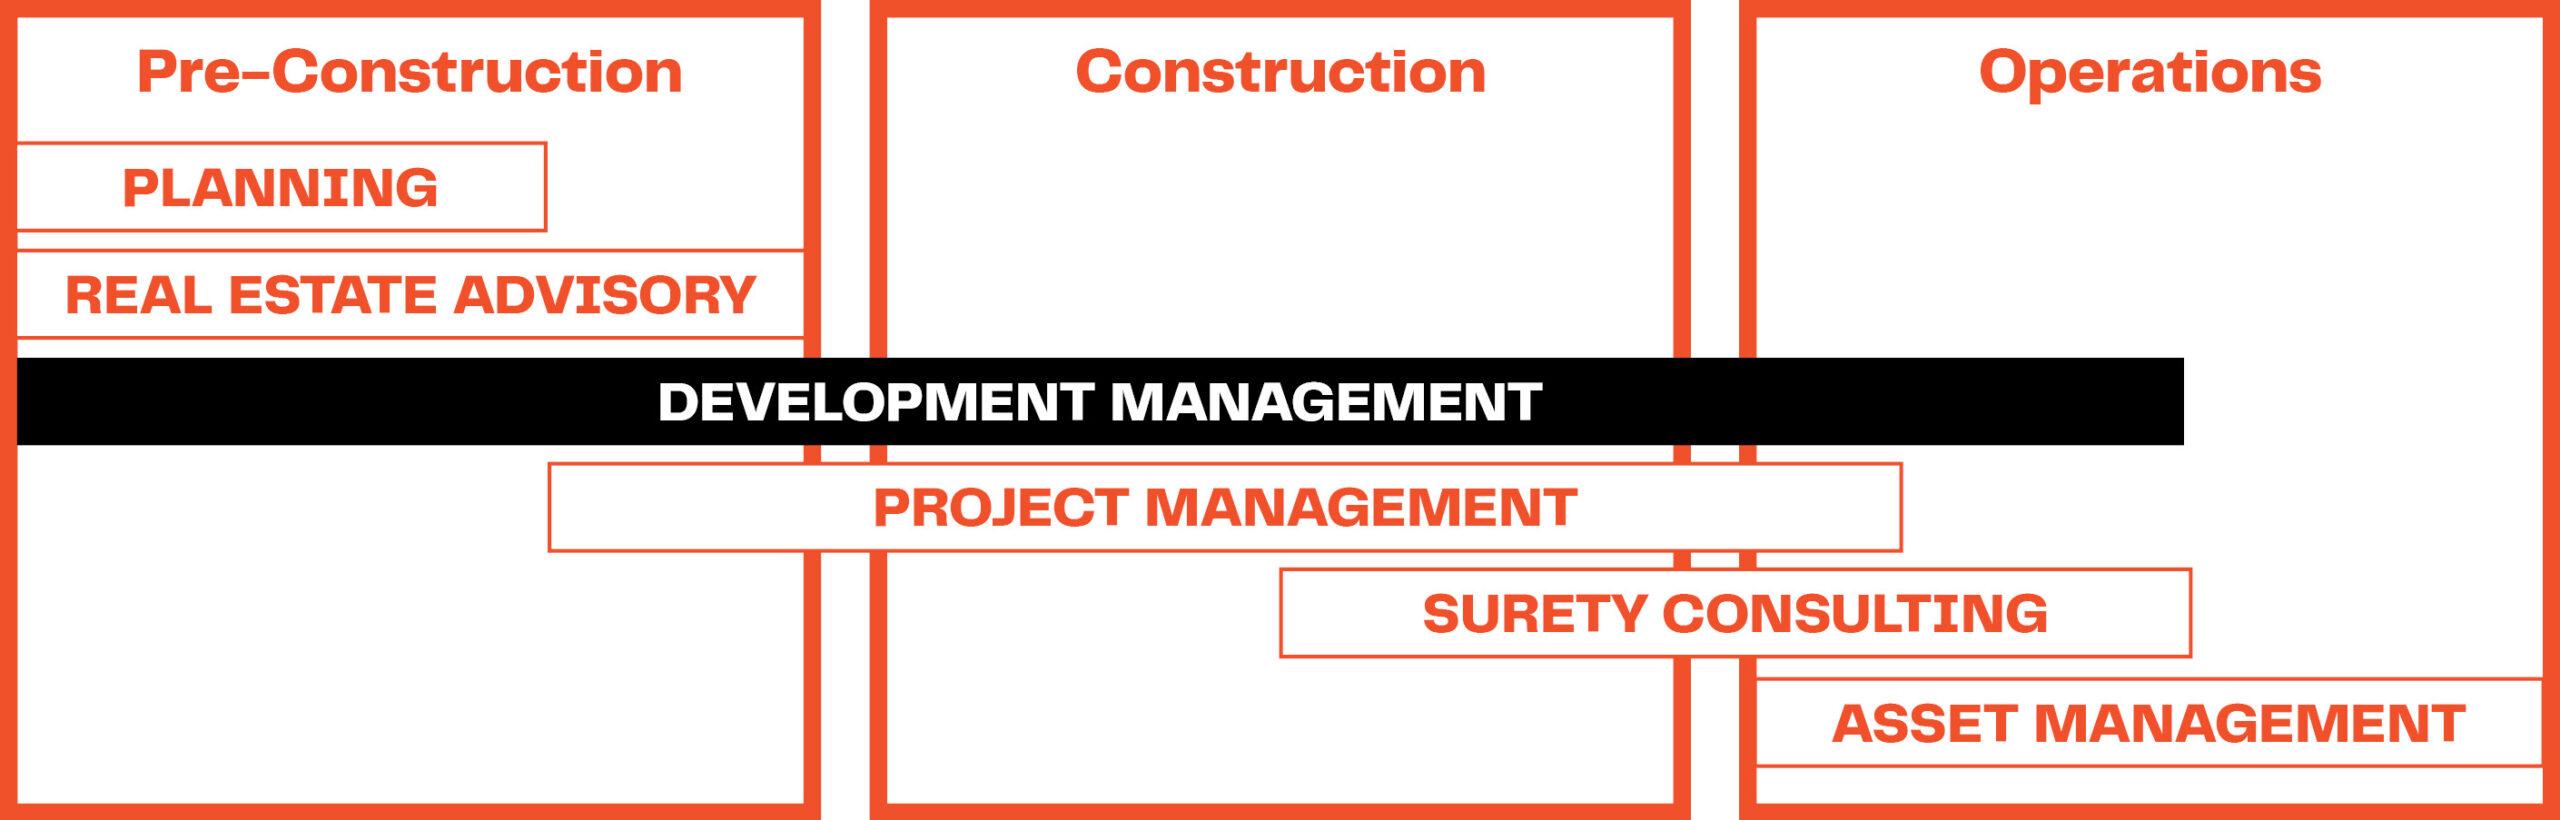 Services Timeline - Development Management